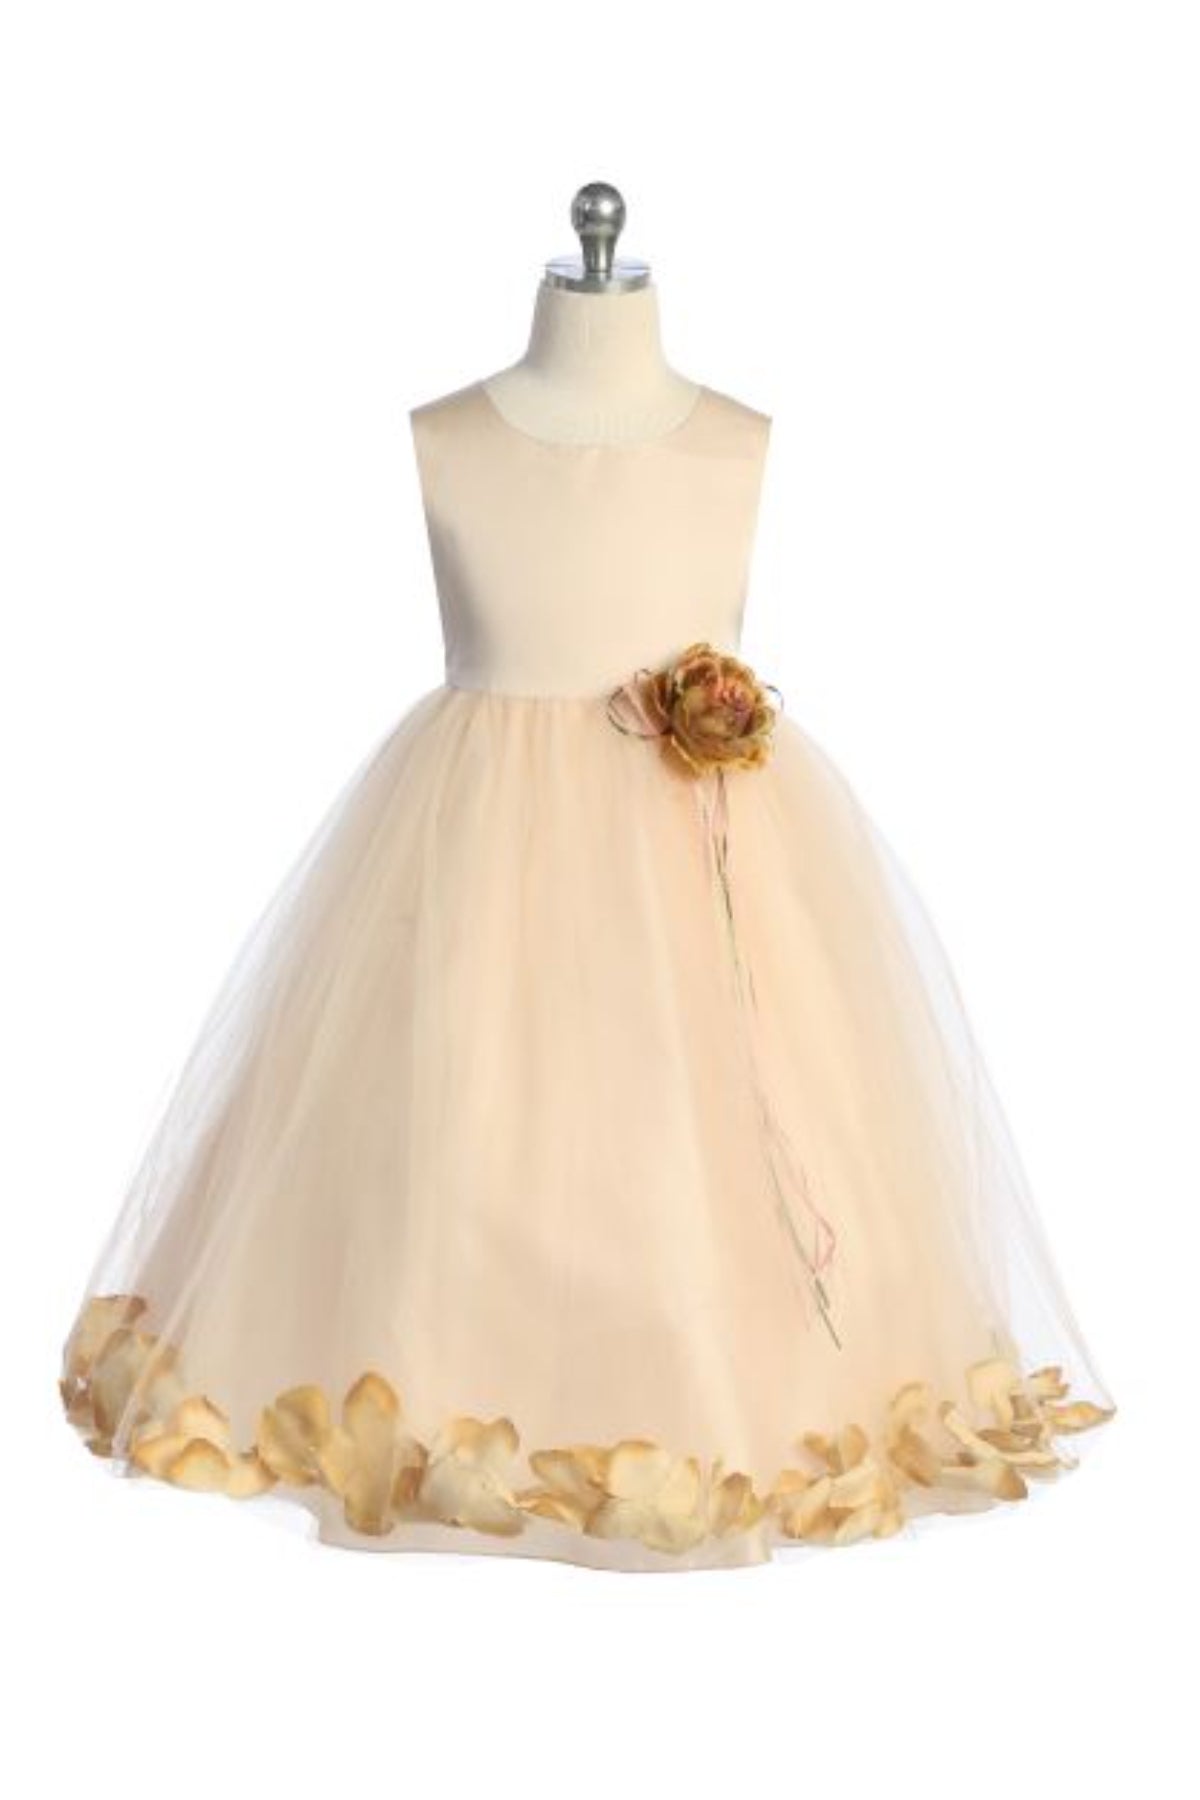 195B Blush Satin Flower Petal Baby Dress